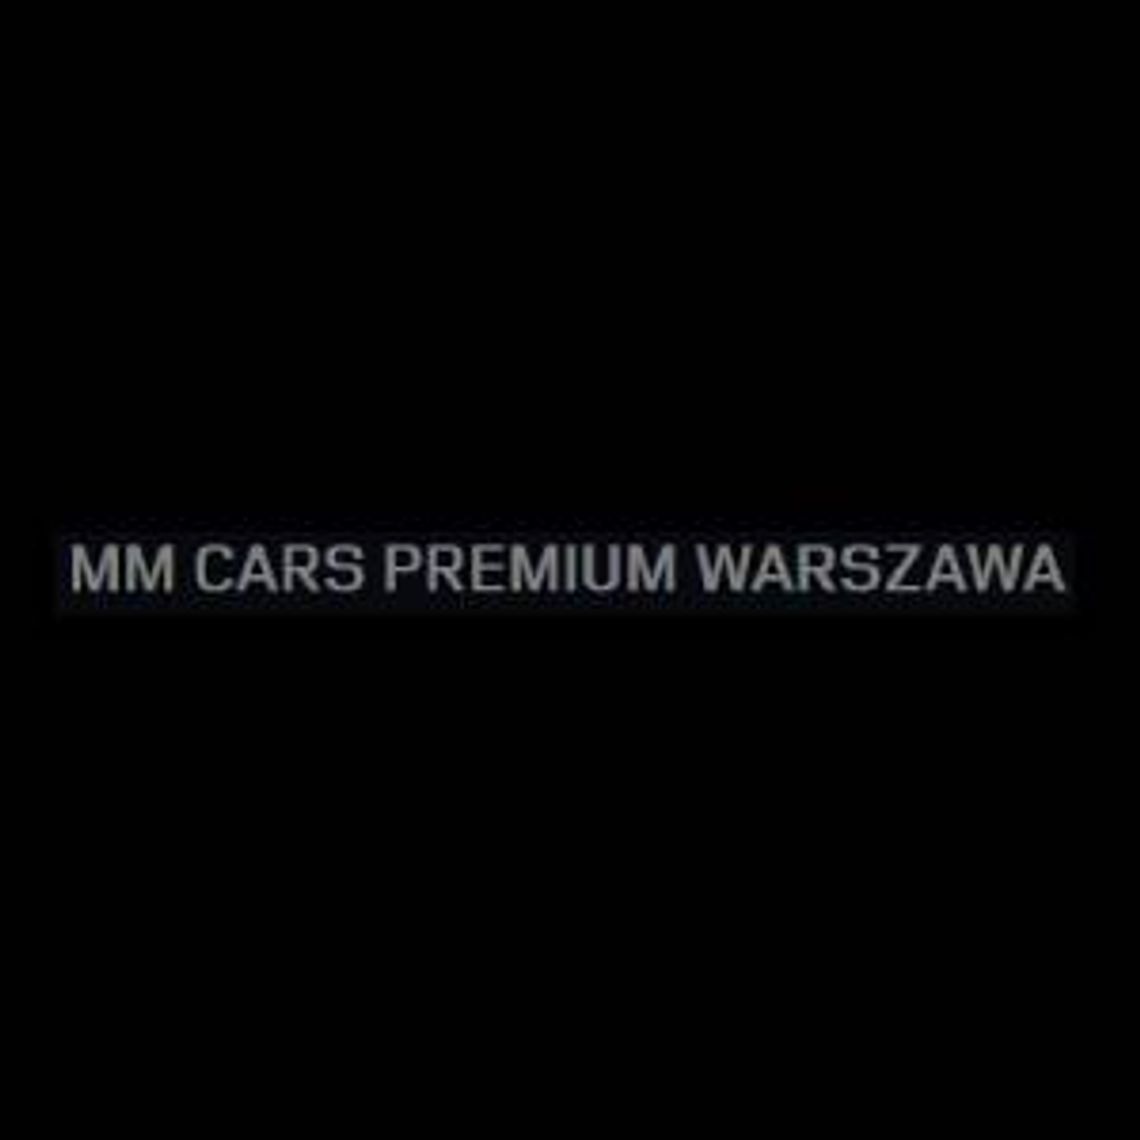 Land Rover salon - MM Cars Premium 